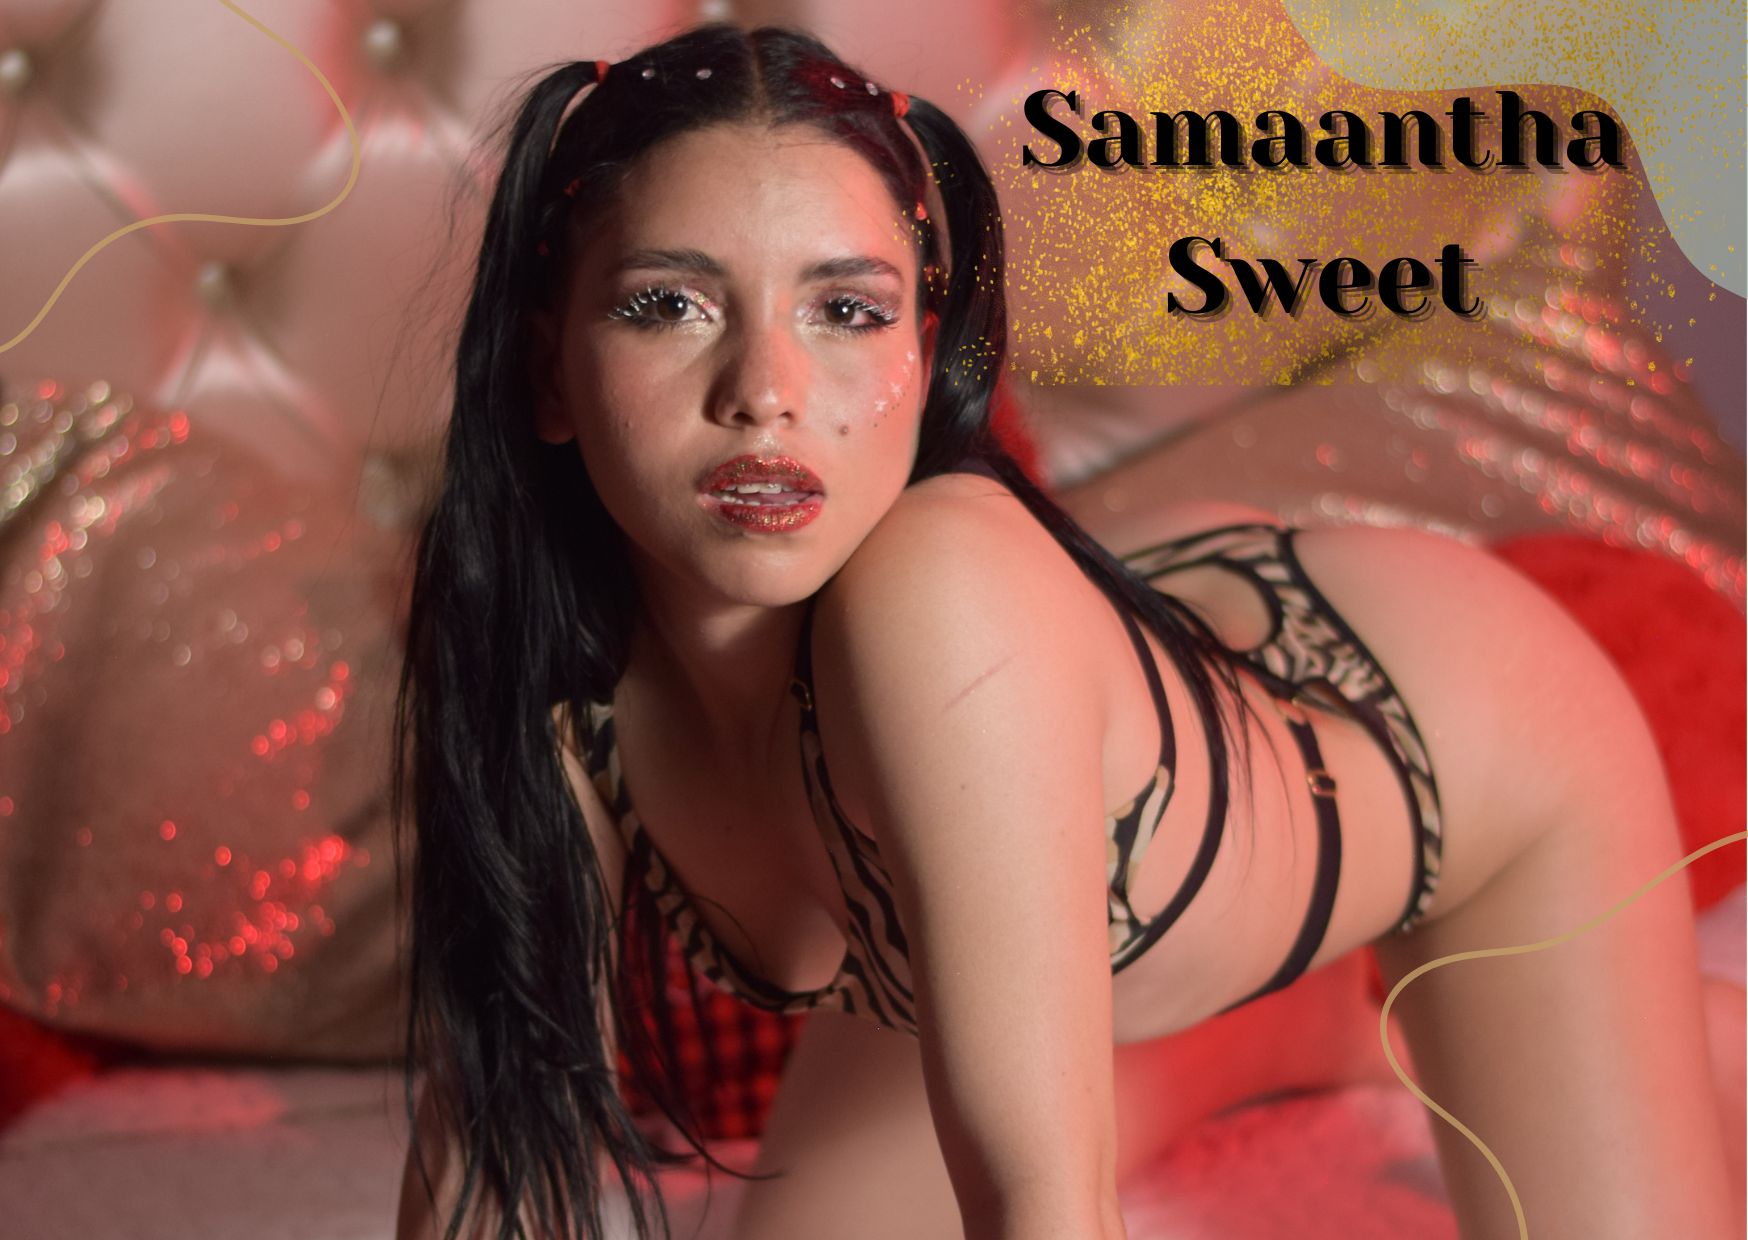 SAMAANTHA-SWEET . image: 1